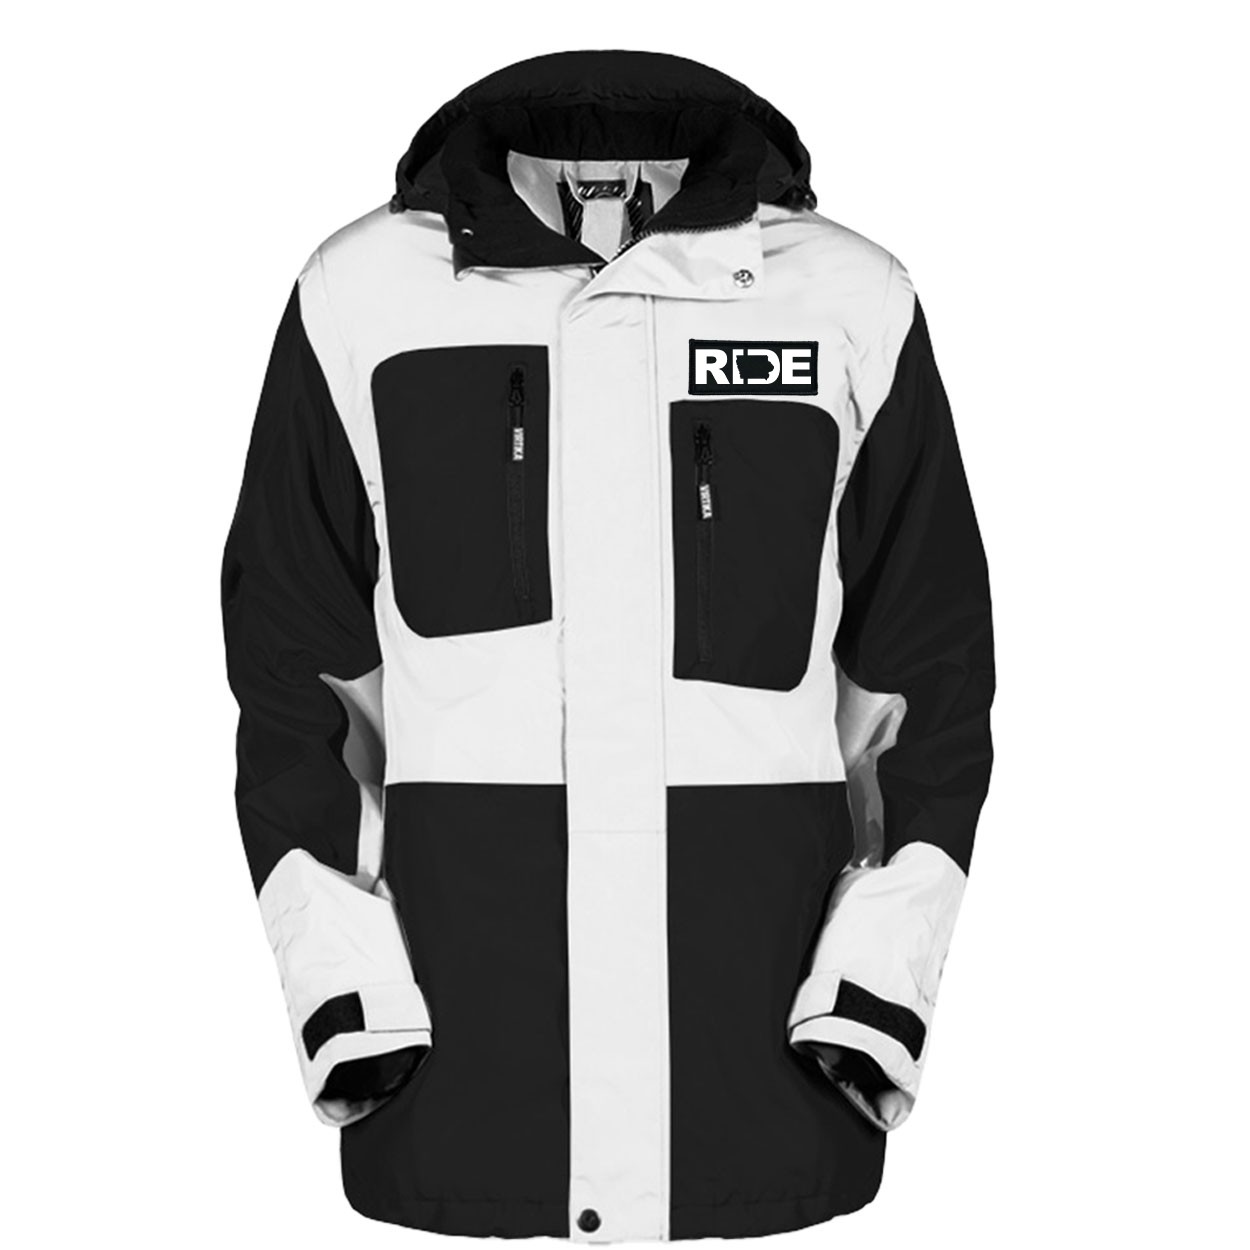 Ride Iowa Classic Woven Patch Pro Snowboard Jacket (Black/White)